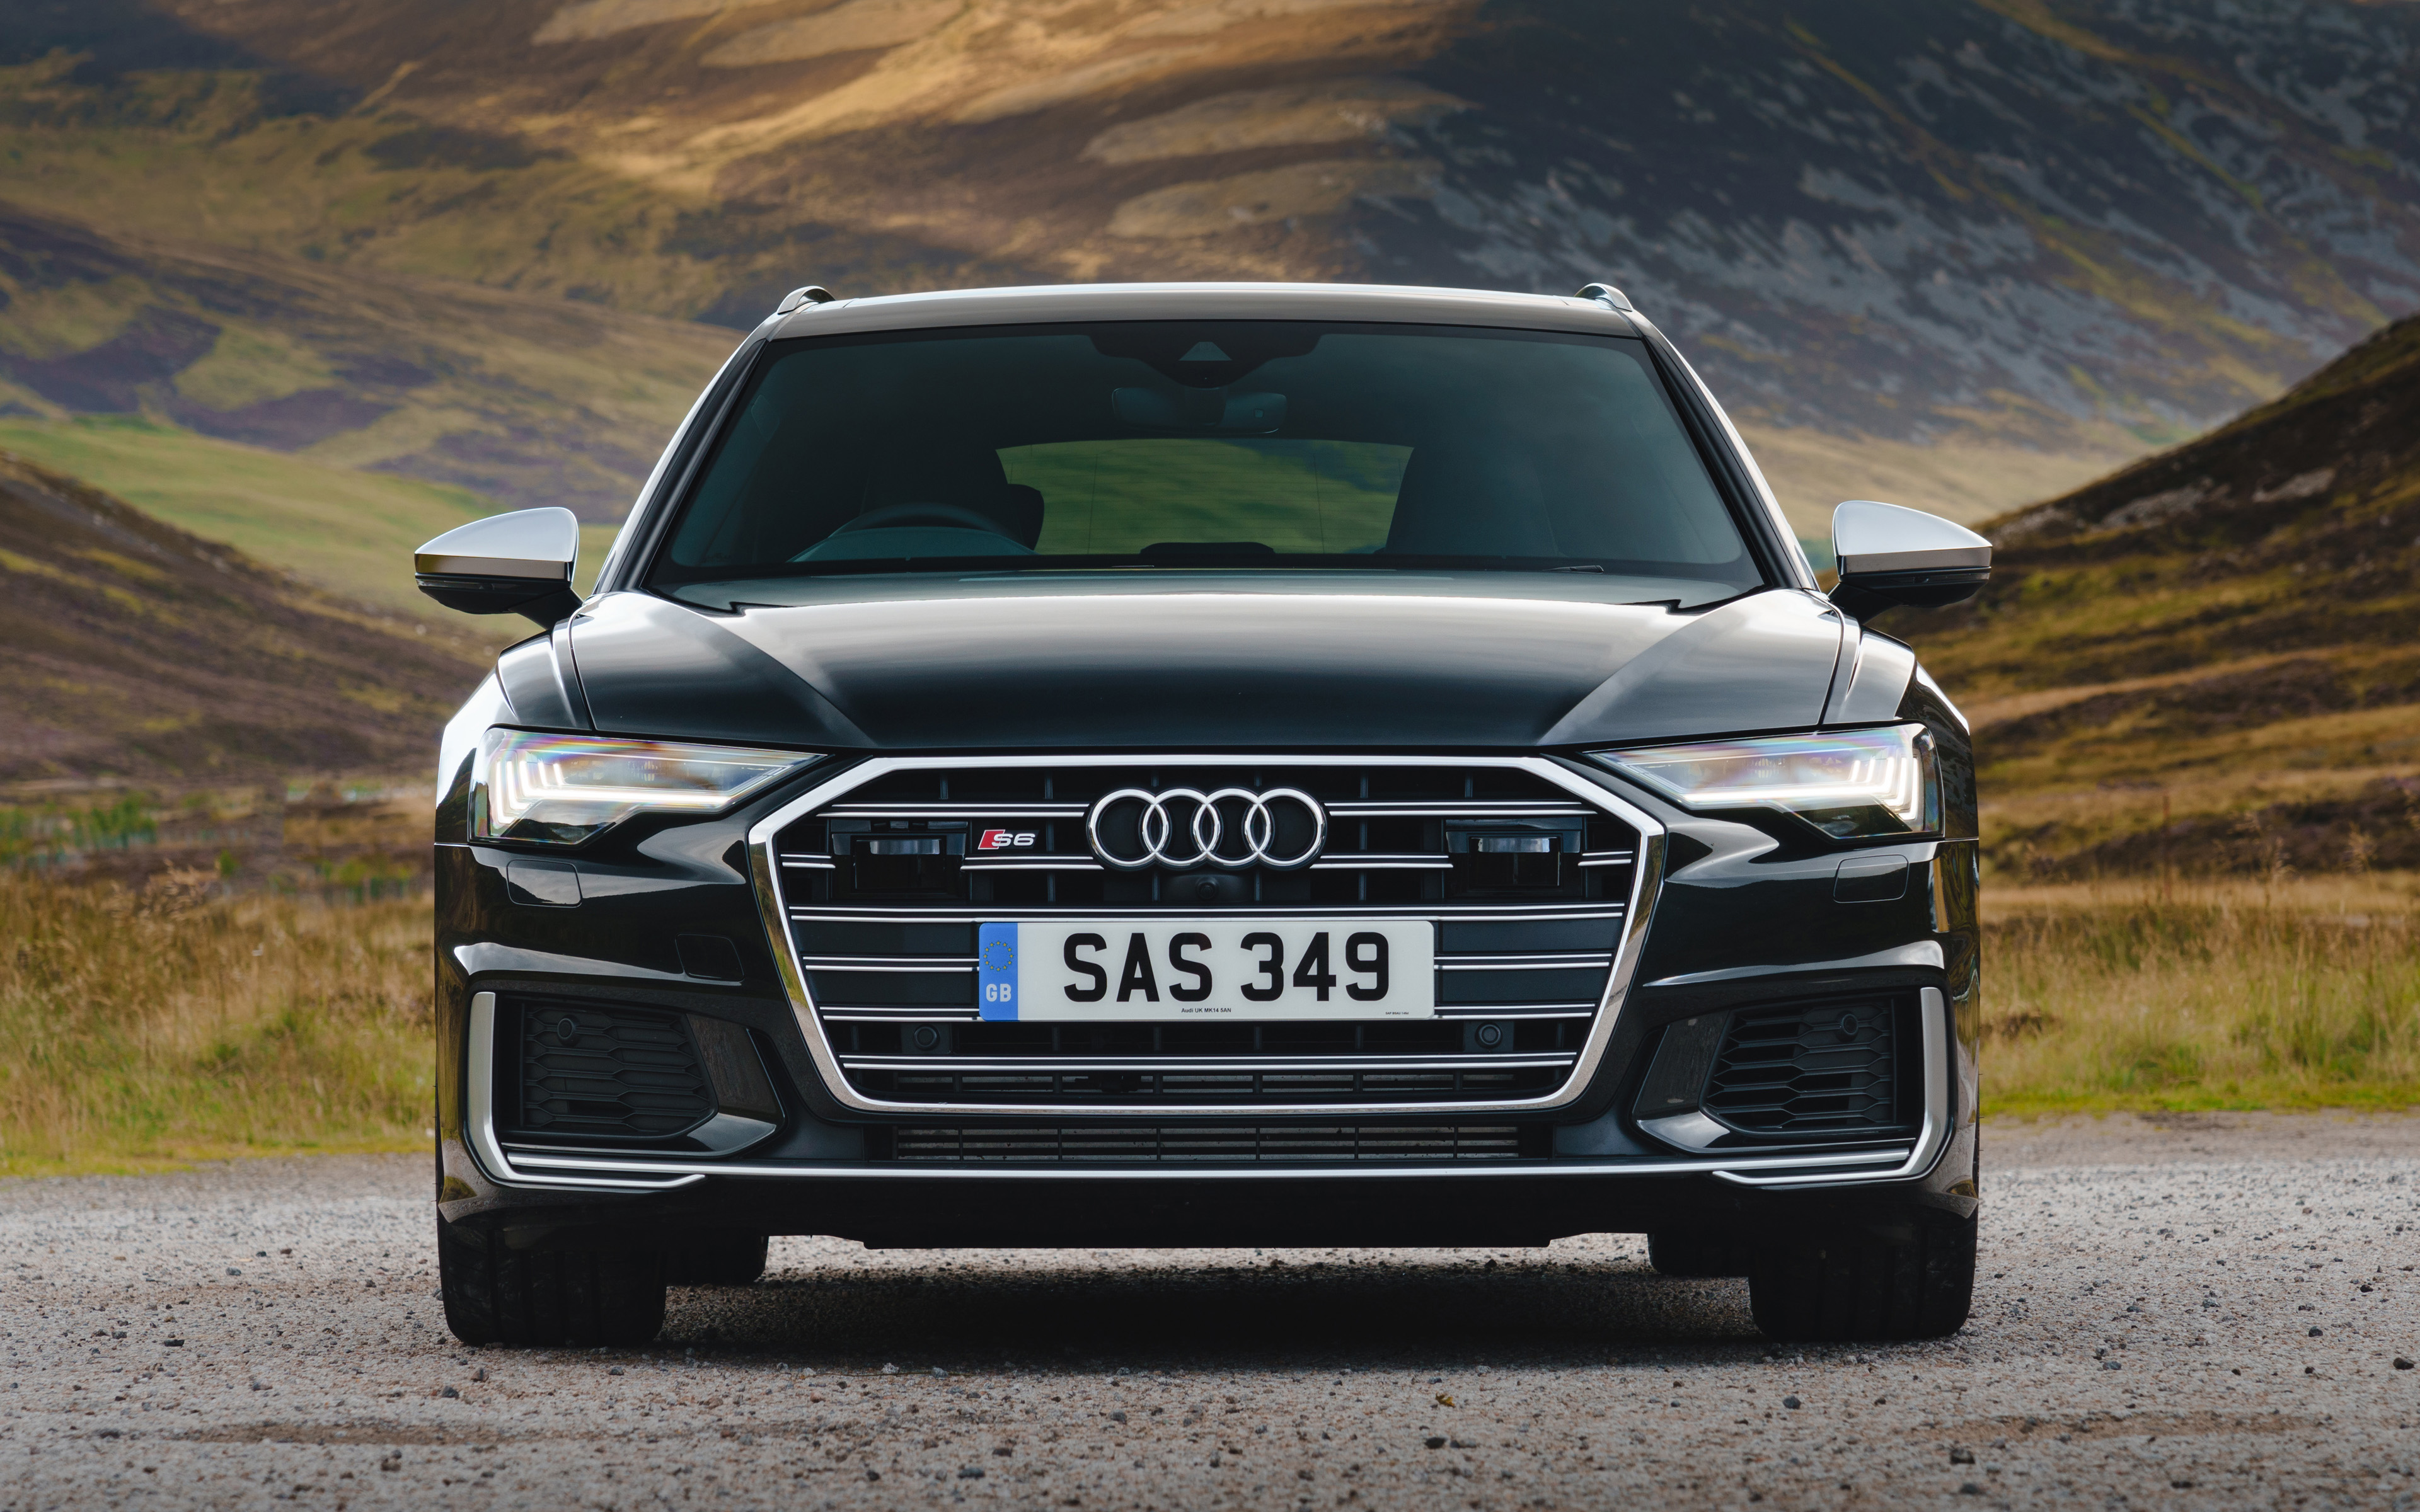 Audi S6, 4k, Front View, 2019 Cars, Luxury Cars, Black - S6 Avant Audi 2019 - HD Wallpaper 